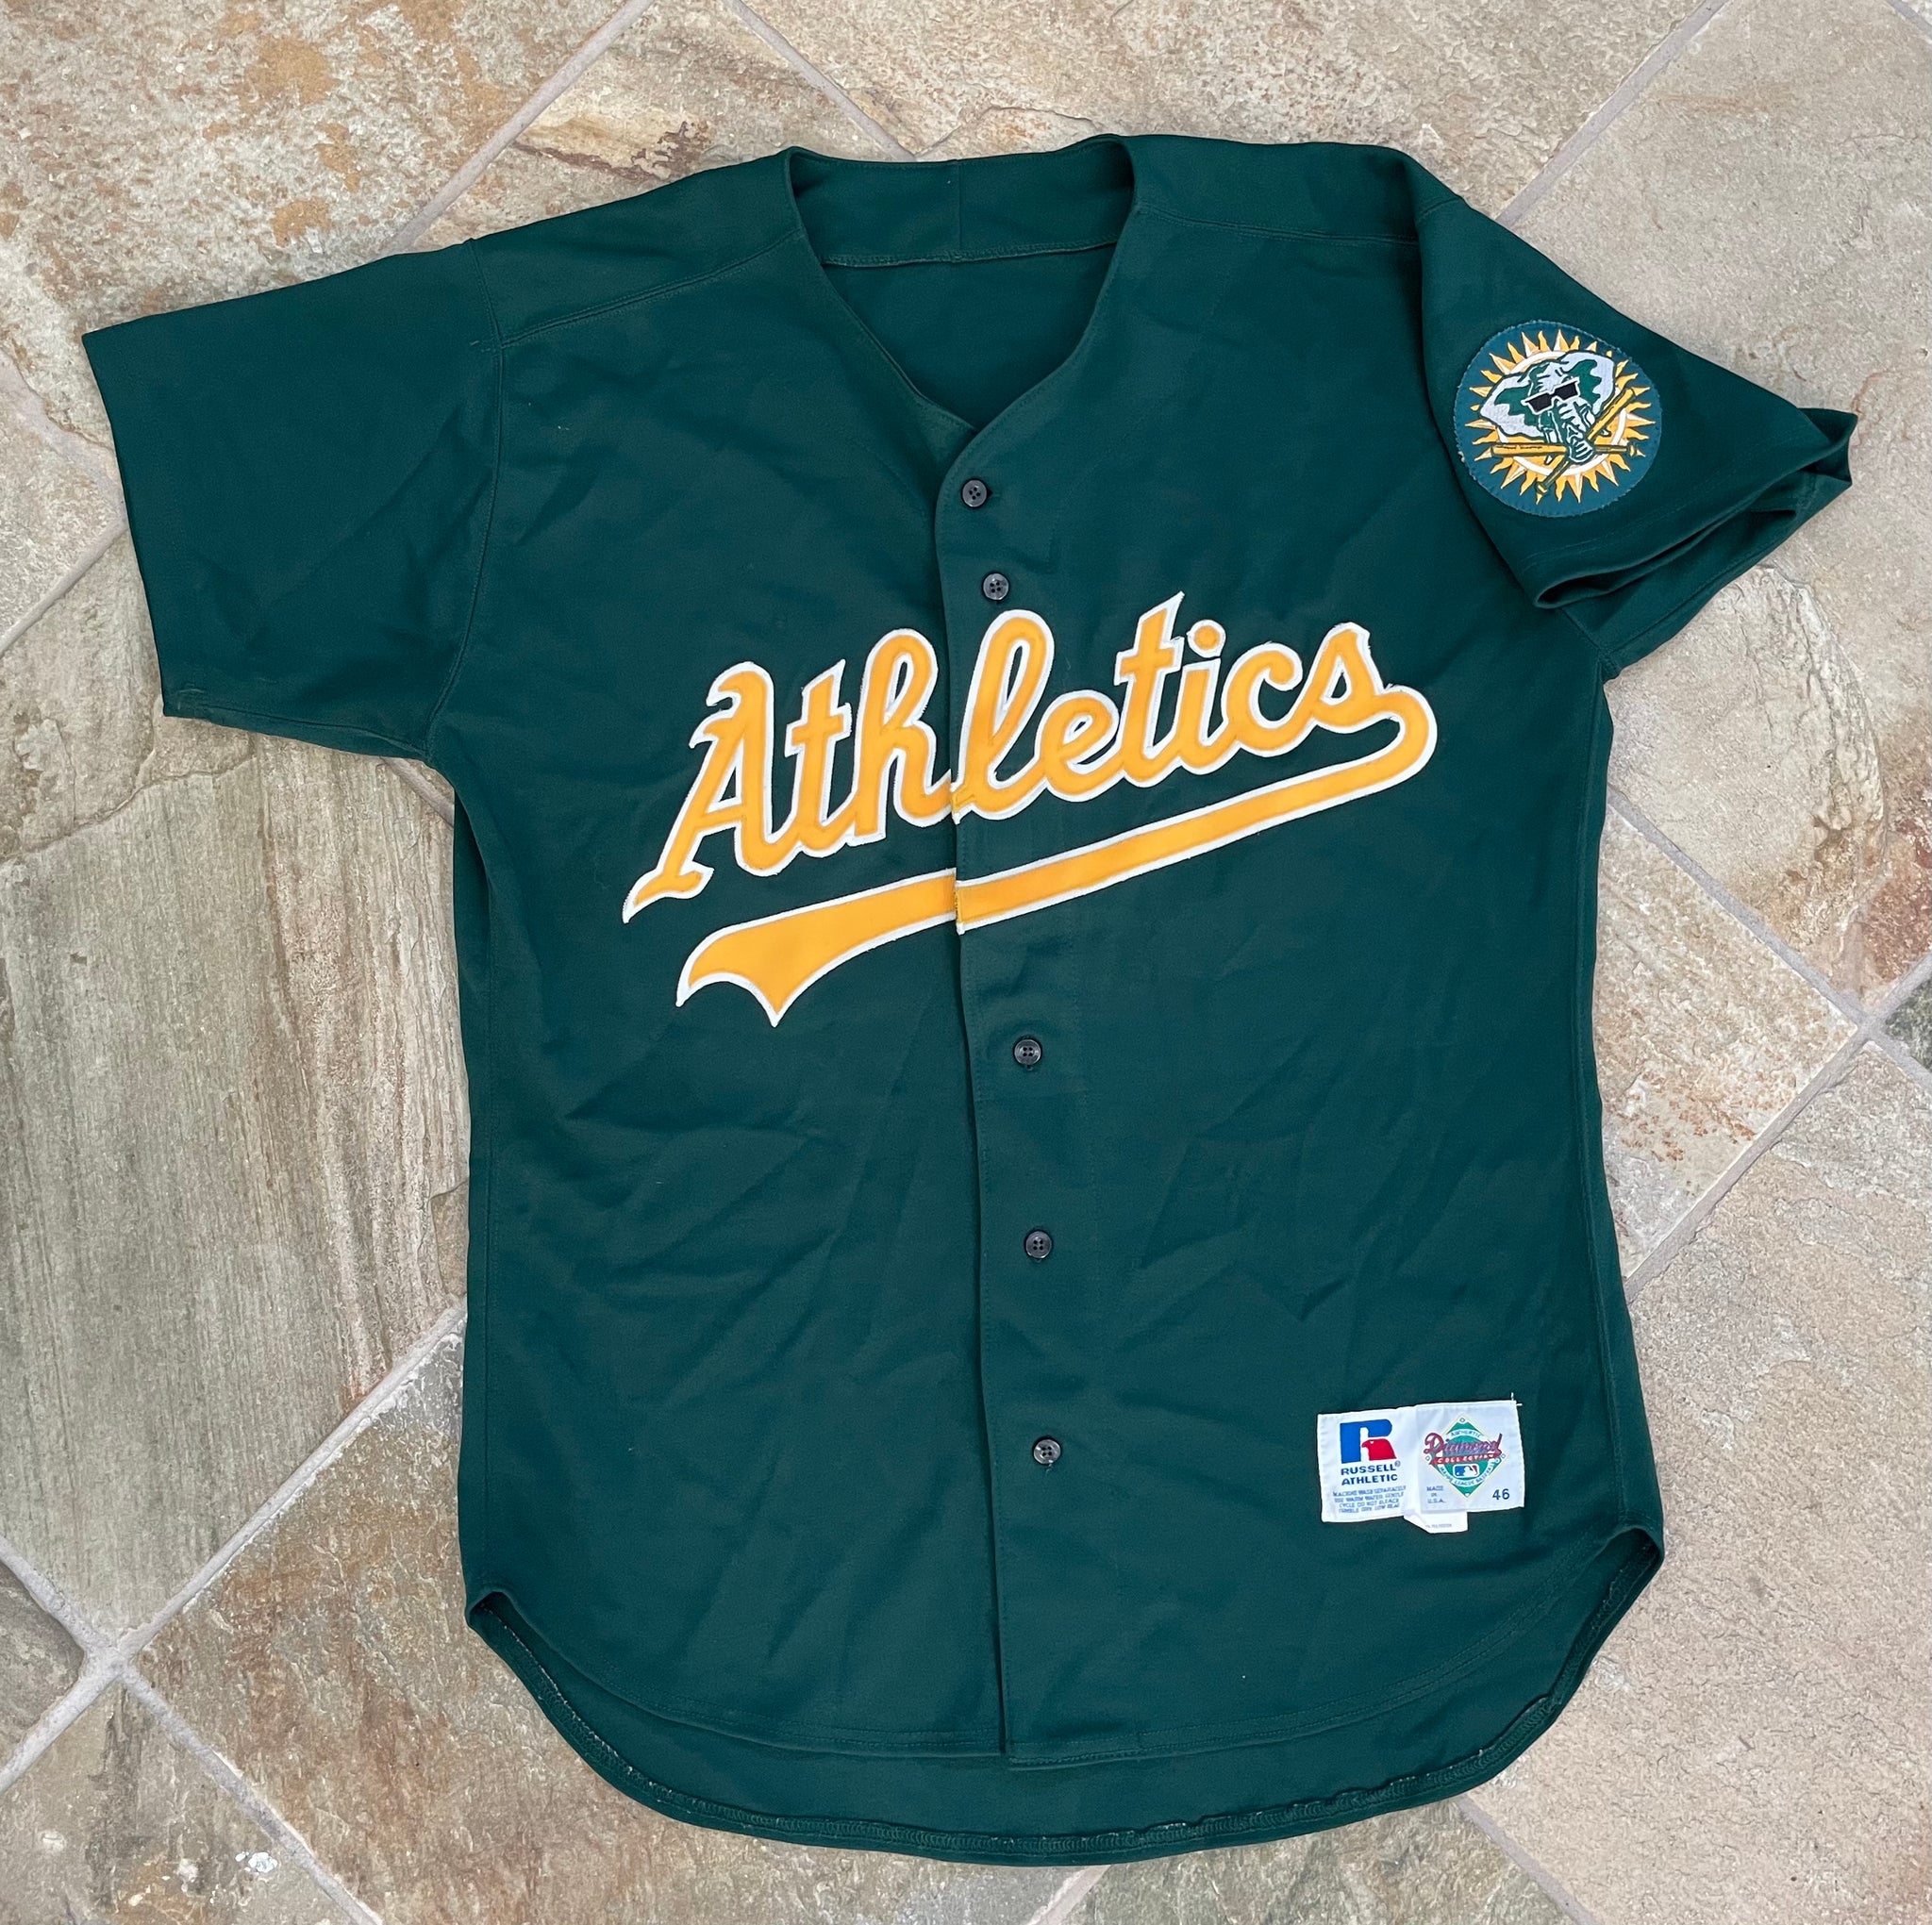 Oakland Athletics 48 Size MLB Jerseys for sale